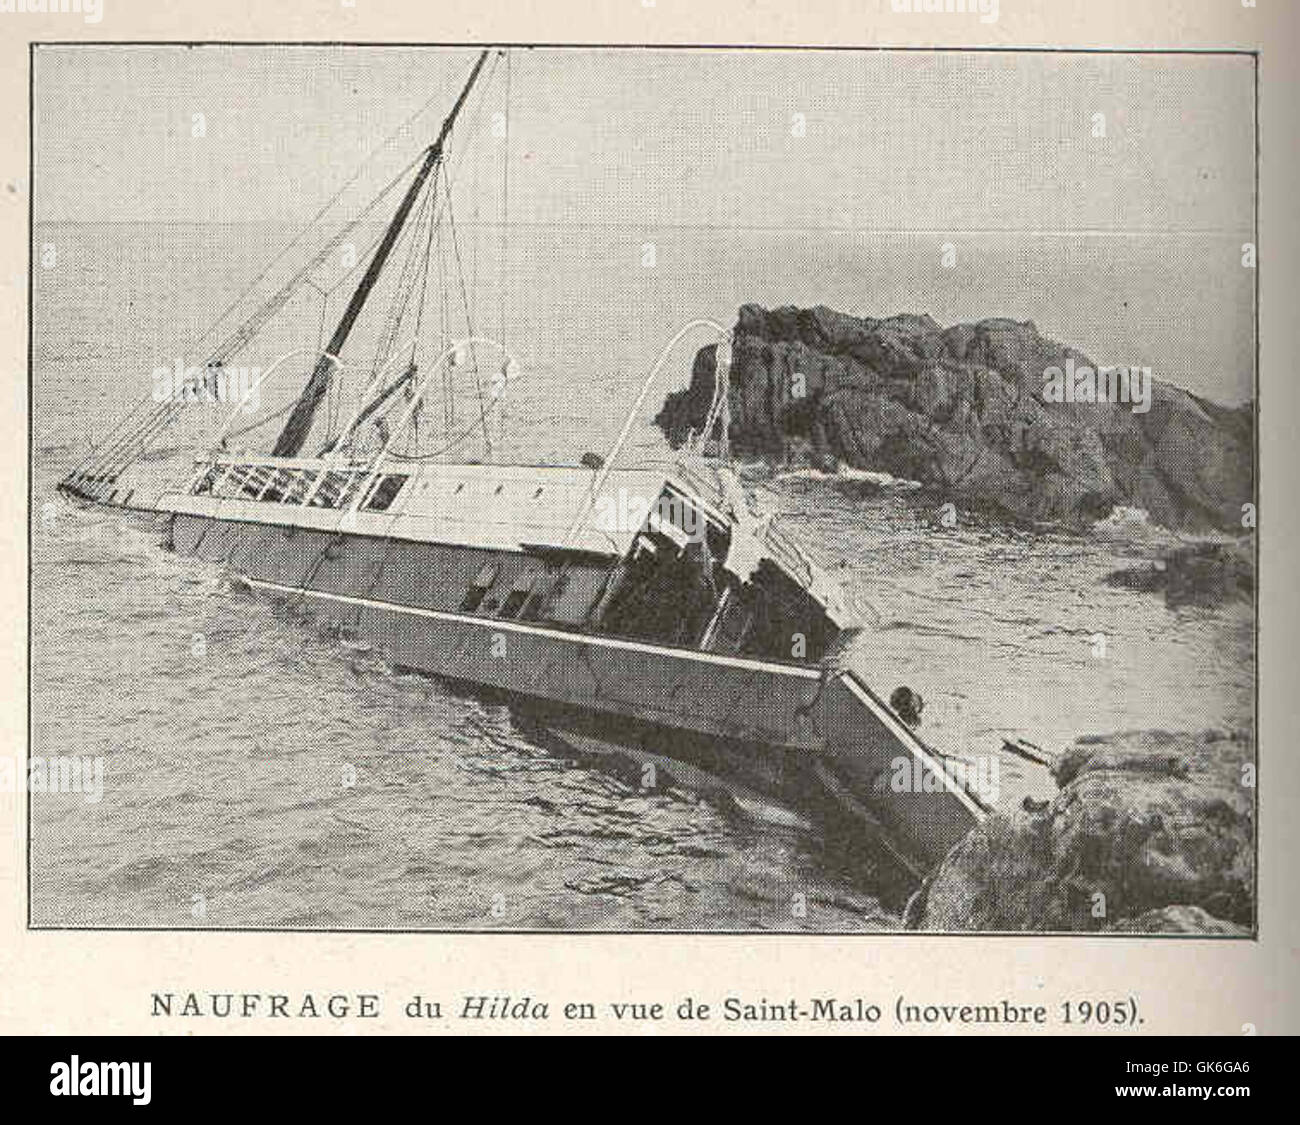 37455 Naufrage du Hilda en vue de Saint-Malo (november 1905) Stock Photo